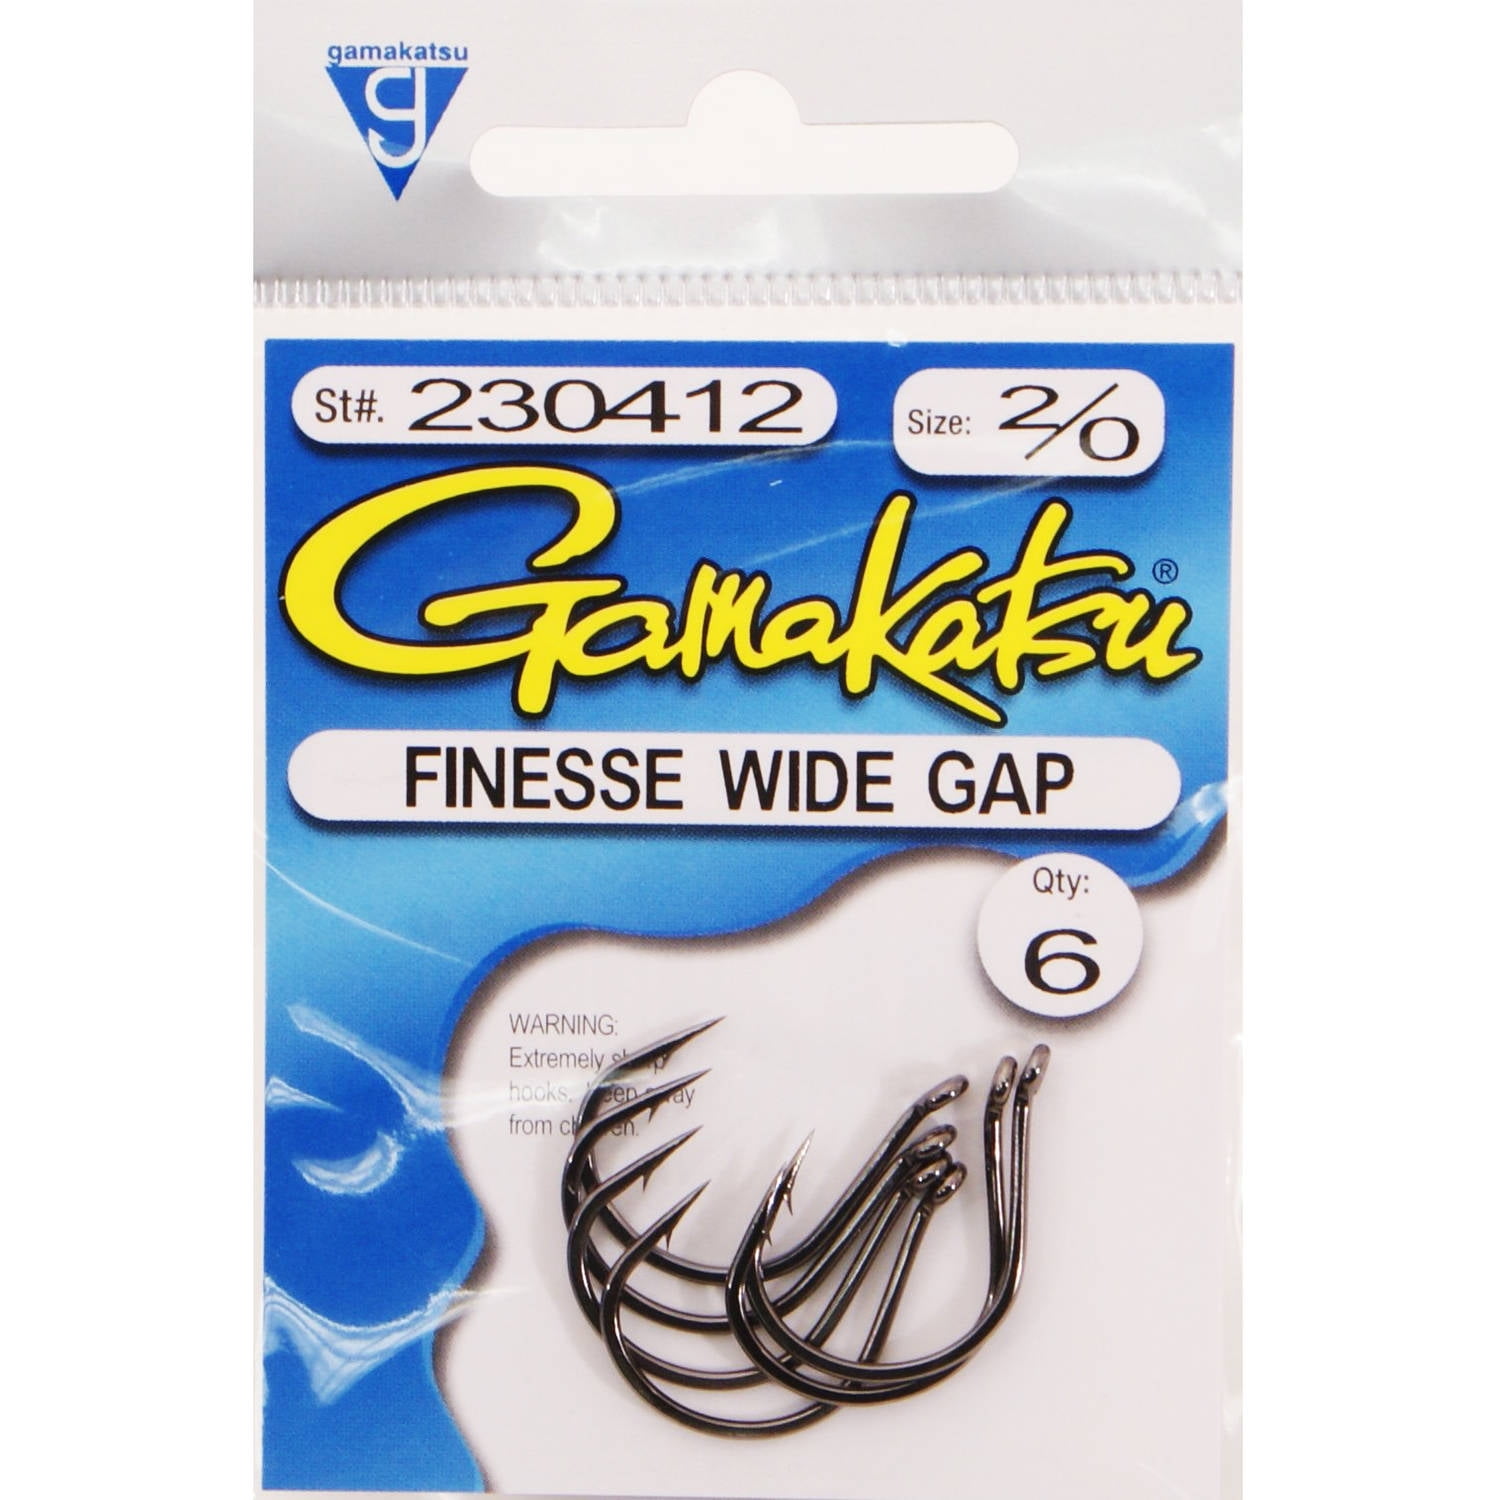 5 Pks Gamakatsu Finesse Wide Gap Pointed Hook w/Ringed Eye 4/0 NS Black 230914 